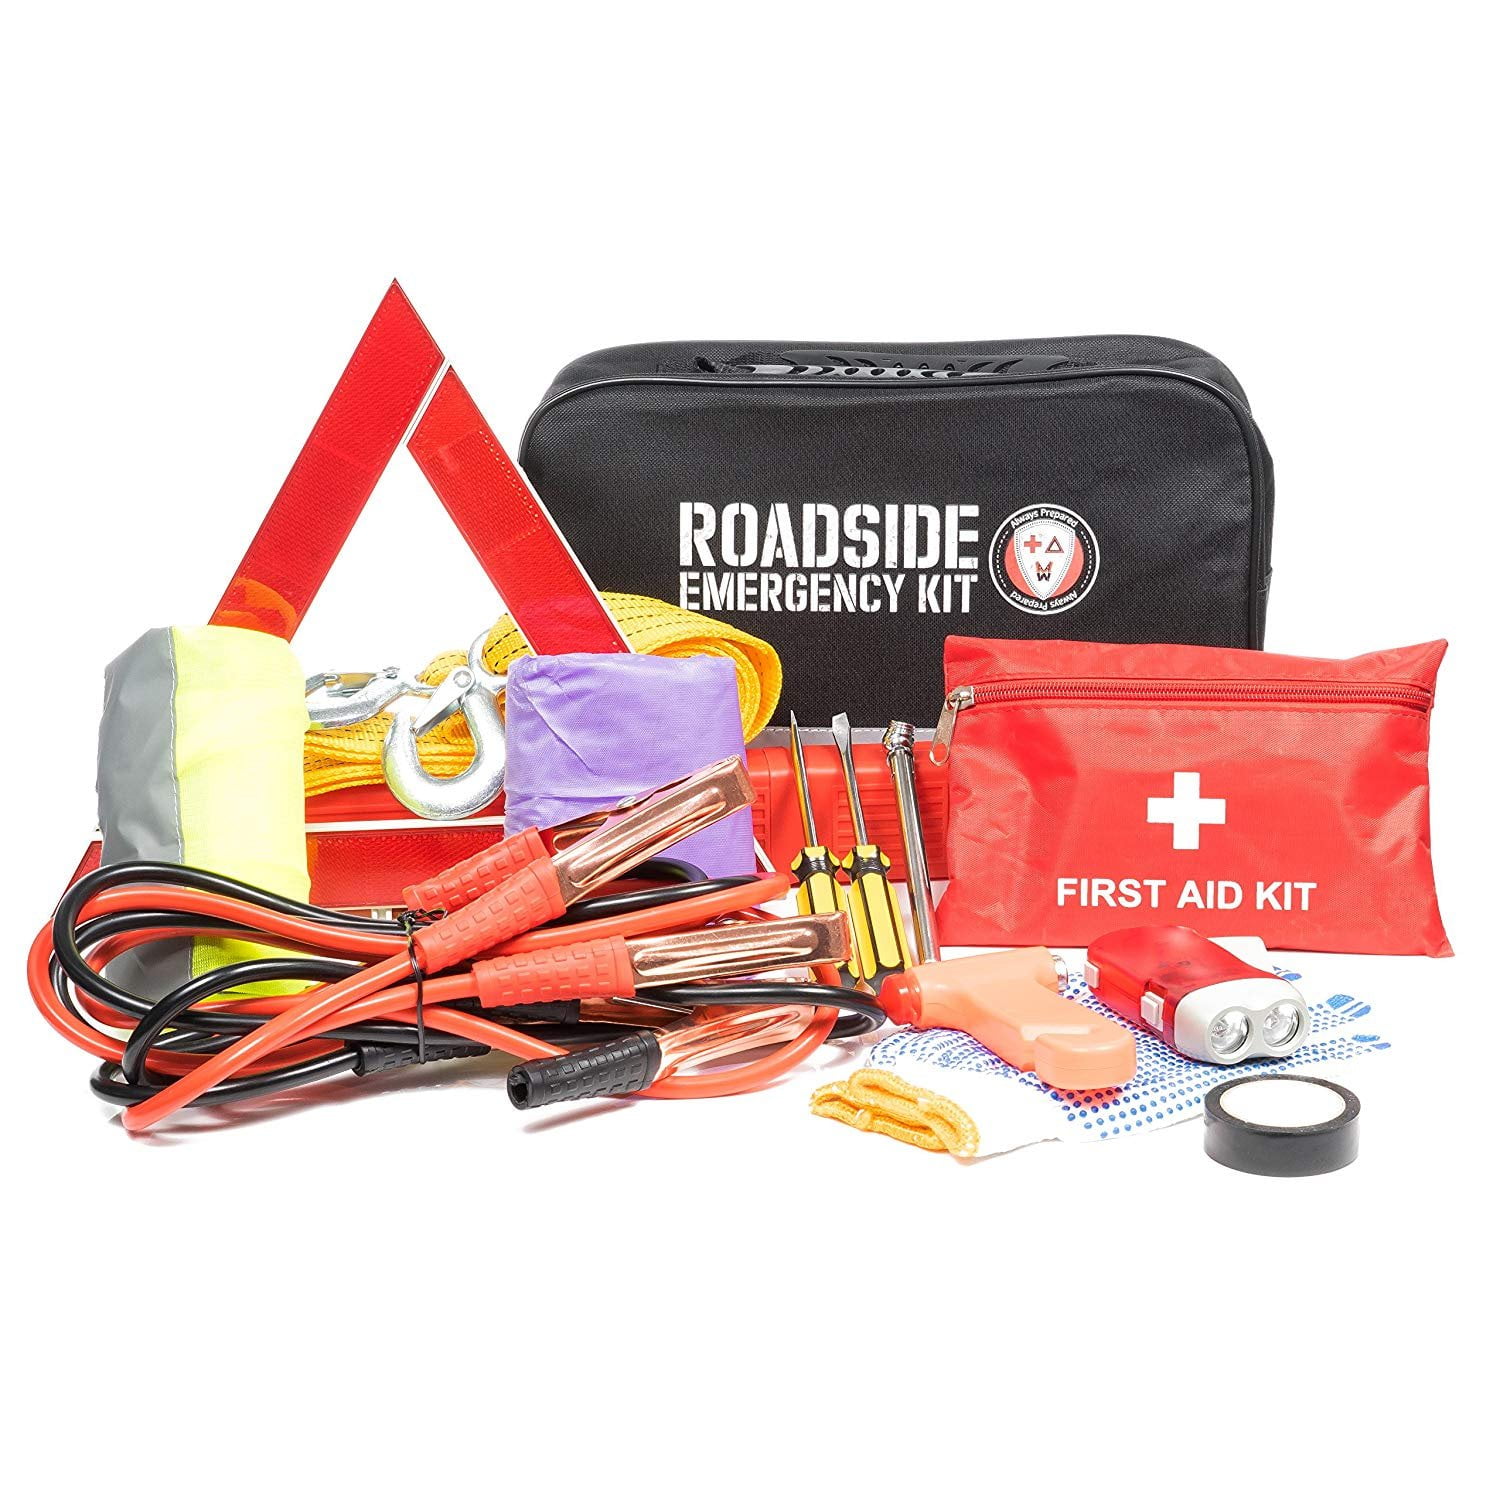 Roadside Assistance Car Emergency Kit - First Aid Kit, Jumper Cables, Tow Rope, LED Flash Light, Rain Coat, Tire Pressure Gauge, Safety Vest & More